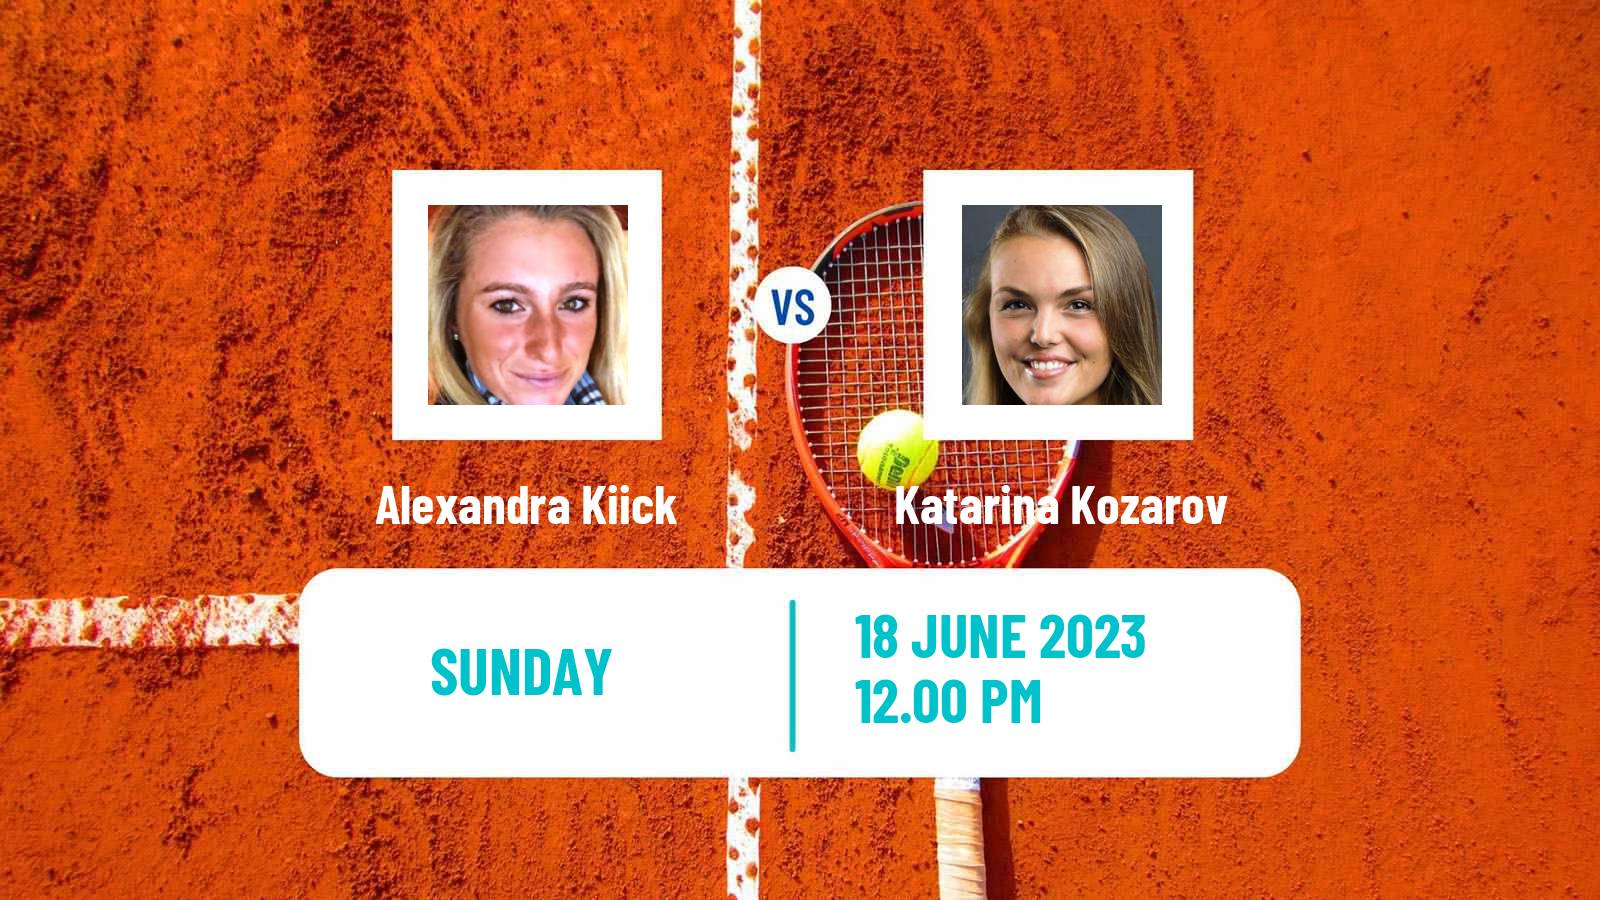 Tennis ITF W25 Colorado Springs Women Alexandra Kiick - Katarina Kozarov